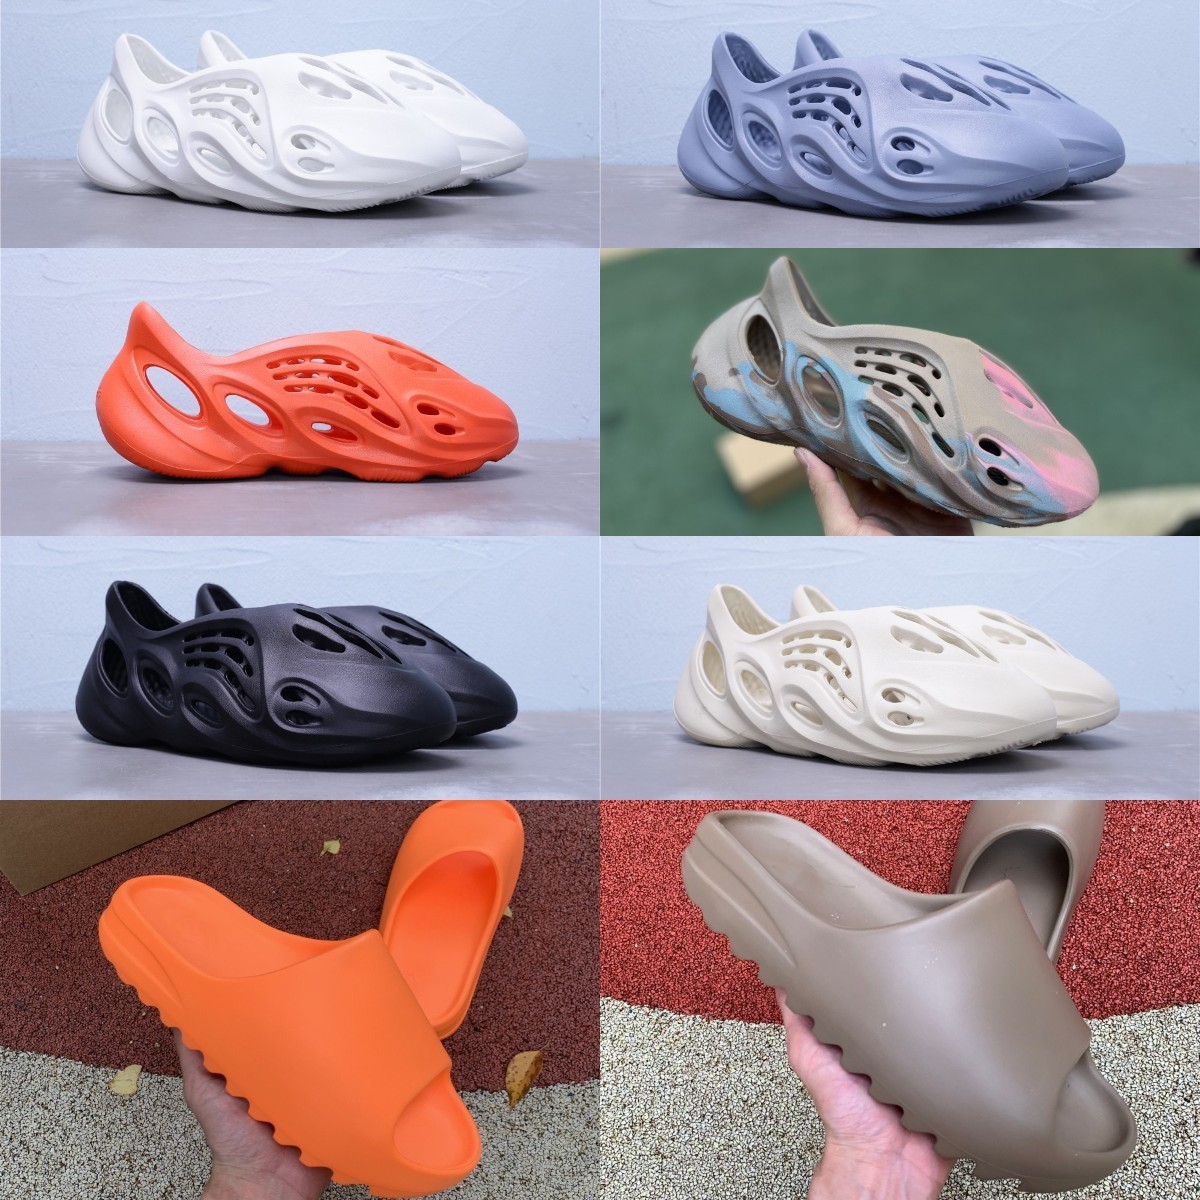 

2022 New Box Foam Runner Slipper Sandal Casual Shoes Shoes Men Women Resin Desert Sand Bone Triple Black Soot Earth Brown Fashion Slides Sandals Us 5-11 A02, Shau